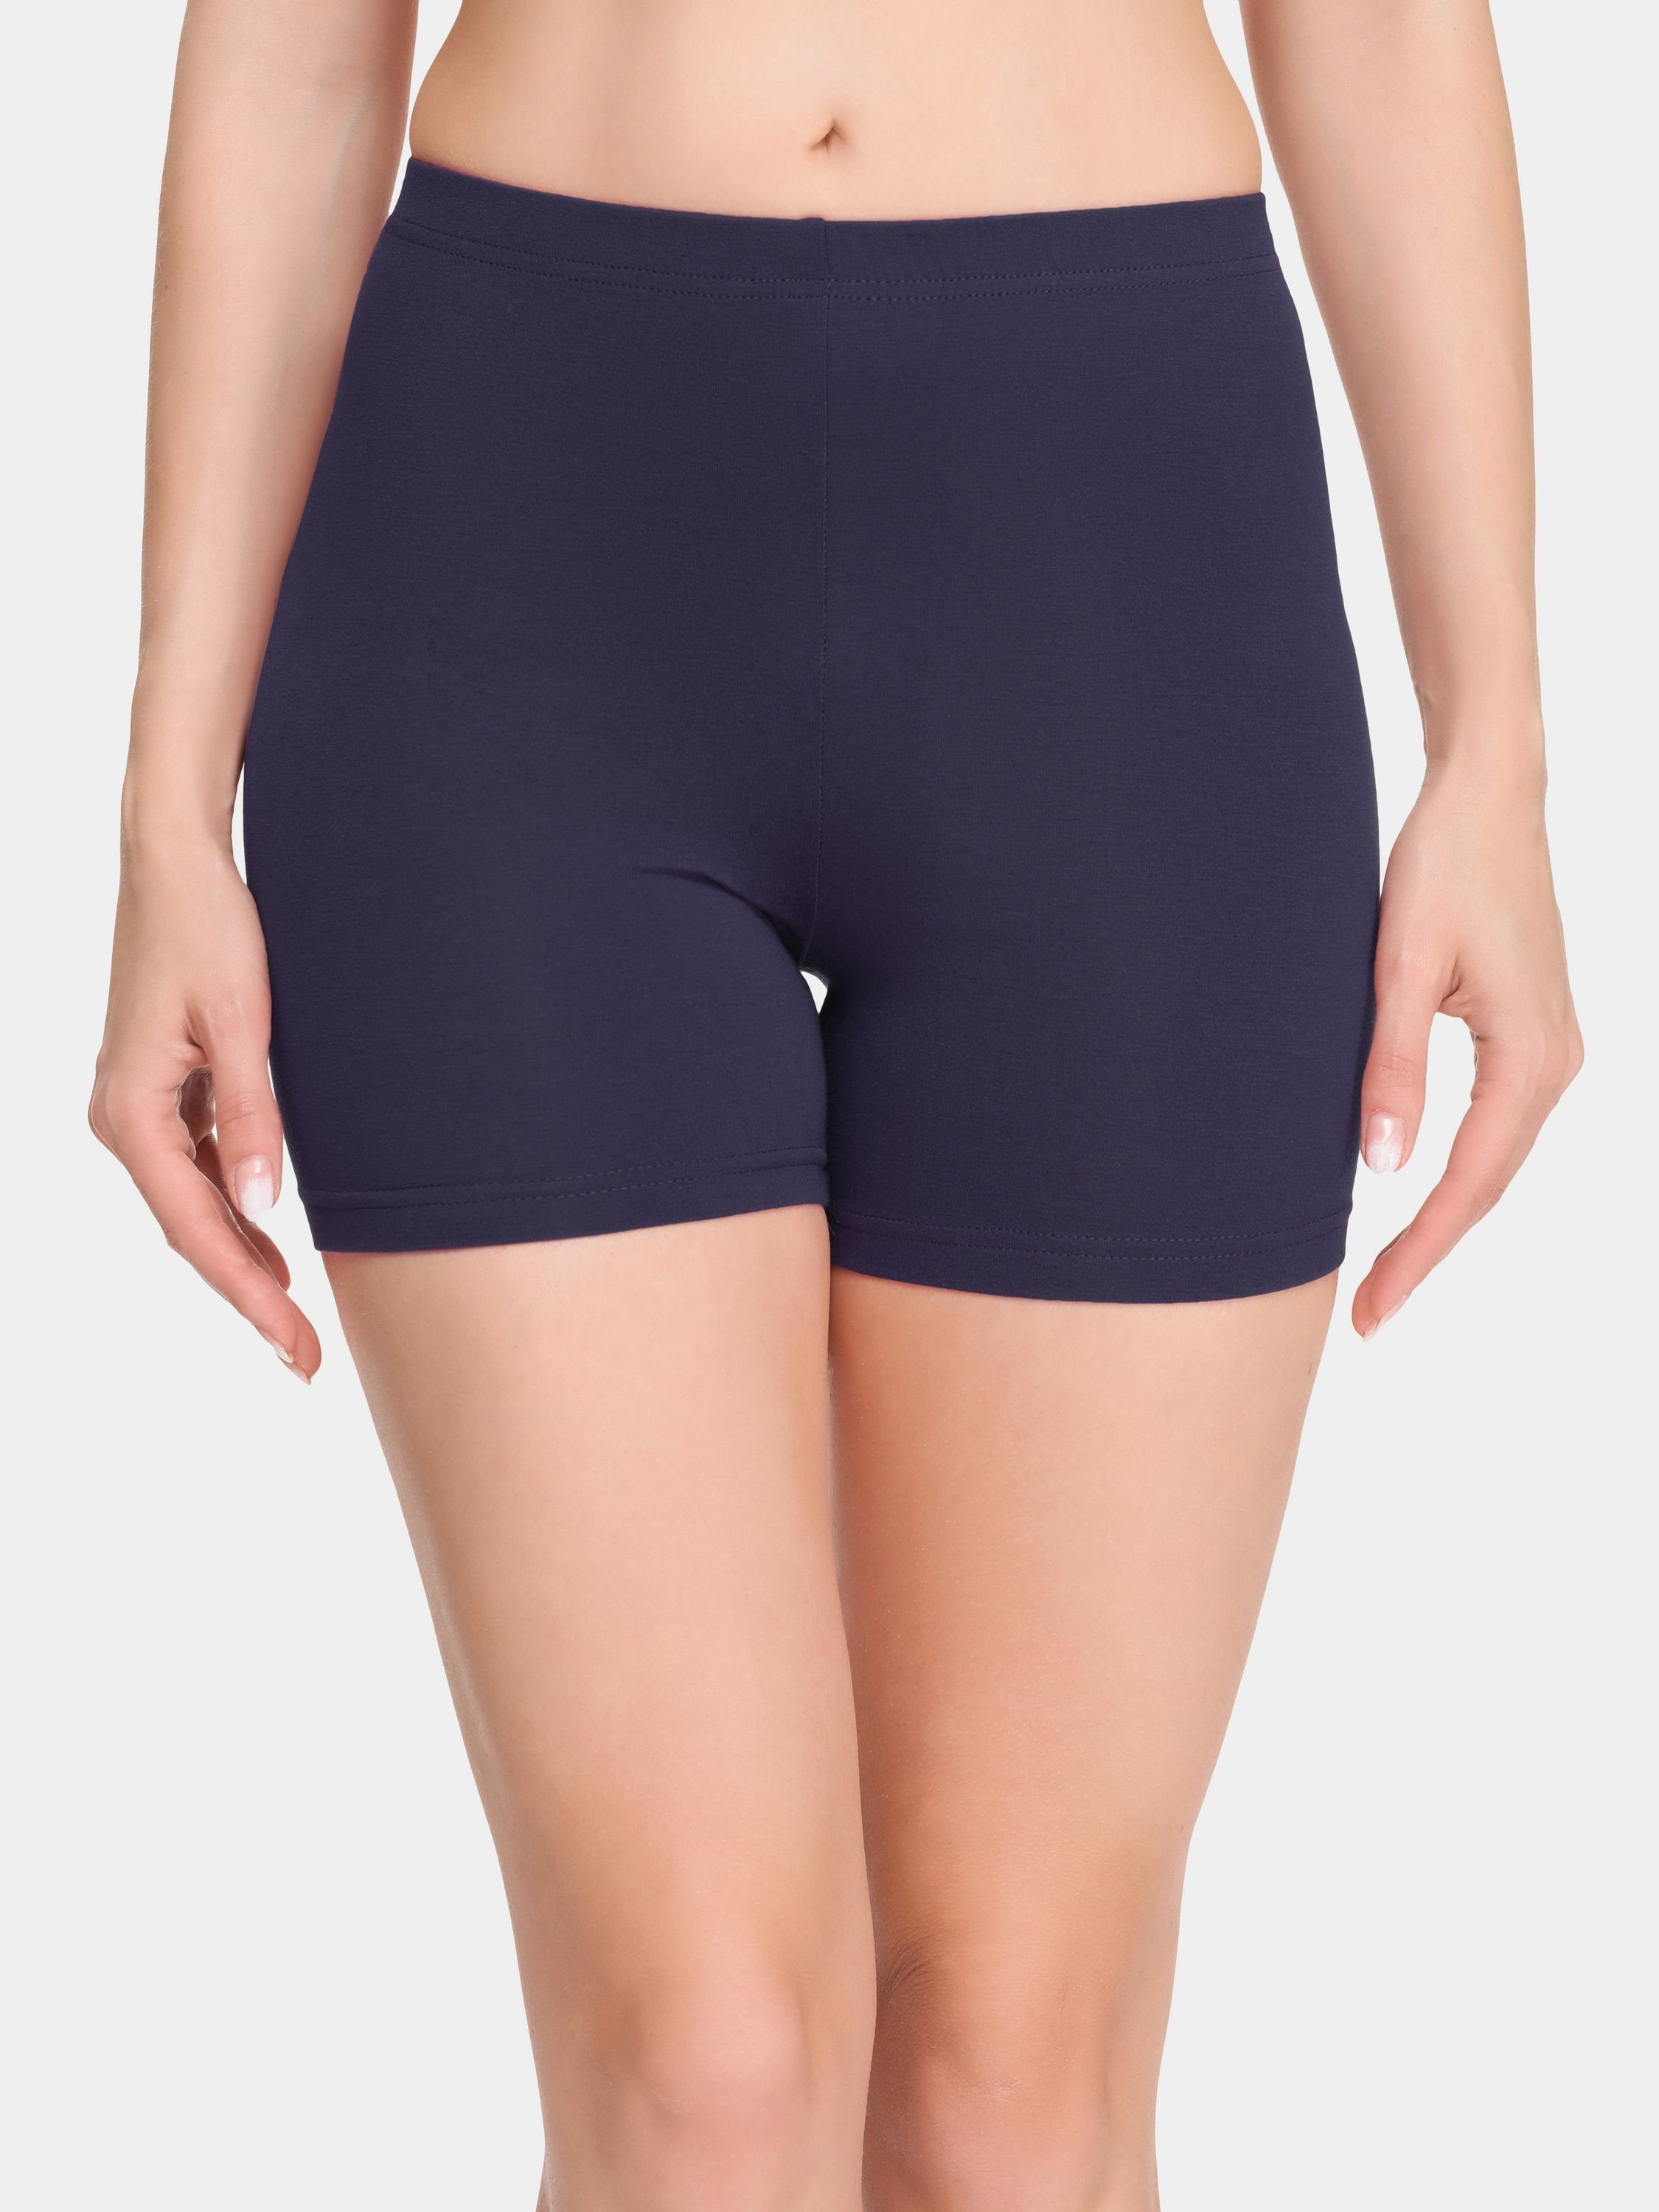 Damen Style (1-tlg) Unterhose MS10-392 Bund Boxershorts Merry Leggings elastischer Marineblau Hotpants Radlerhose Shorts